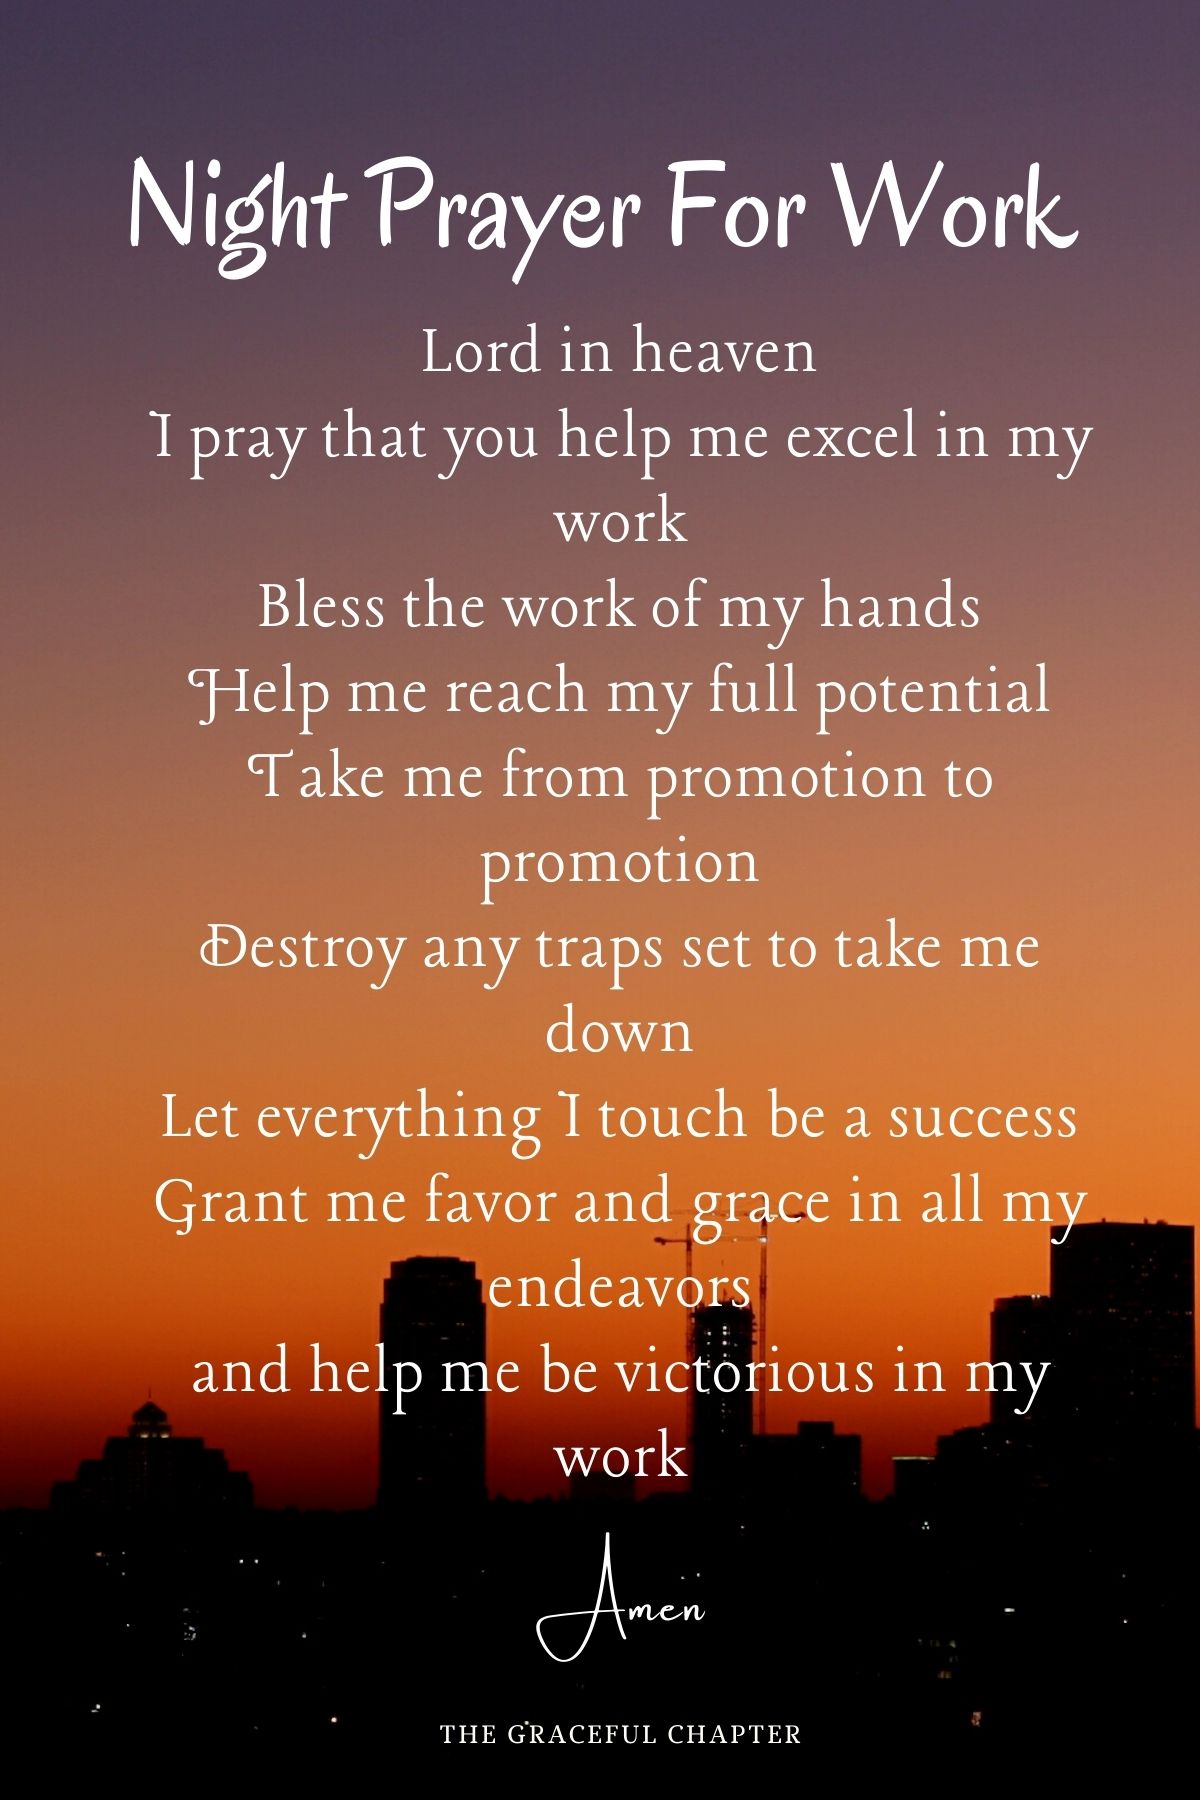 Night prayer for work